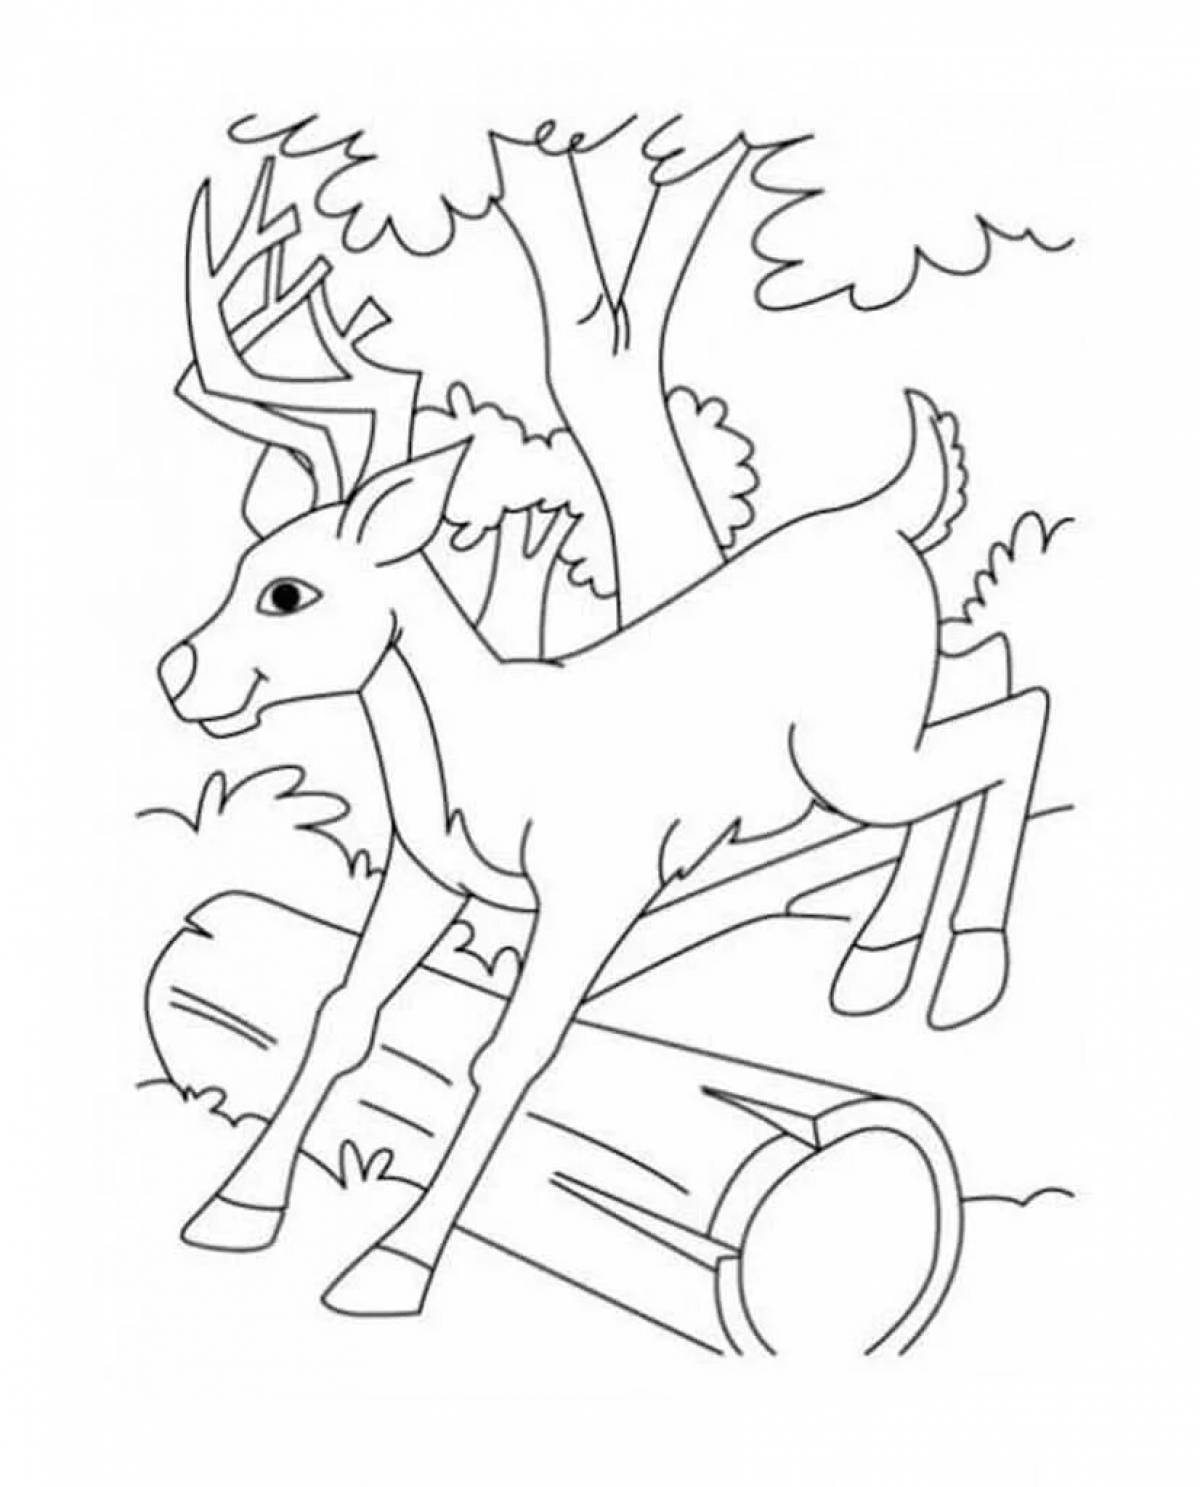 Magic deer coloring page